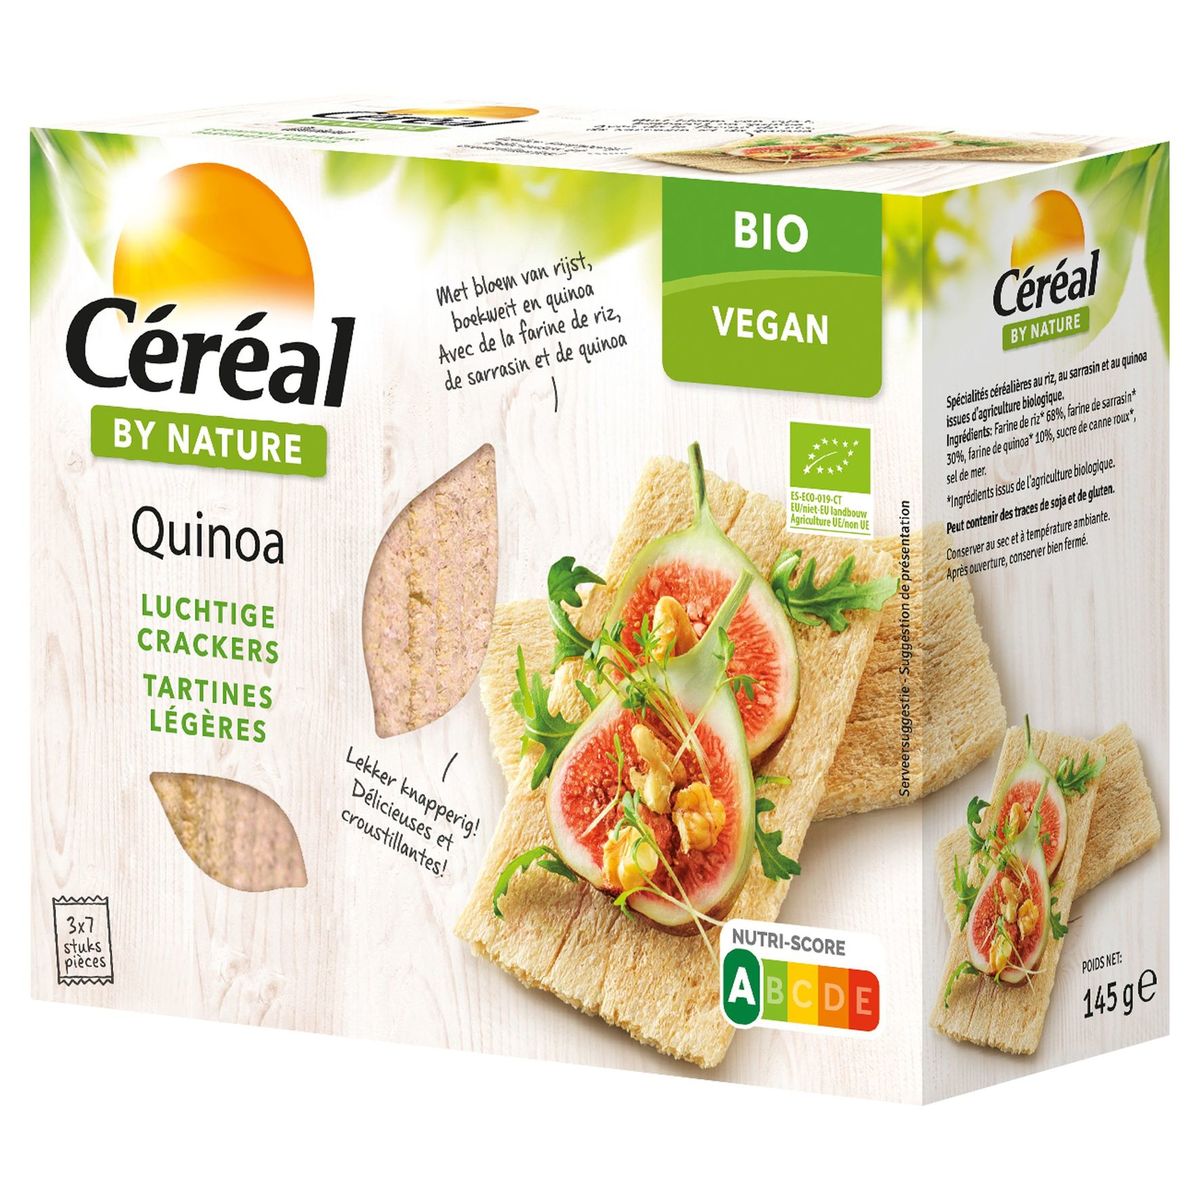 Céréal By Nature Bio Vegan Quinoa Luchtige Crackers 3 x 7 Stuks 145 g